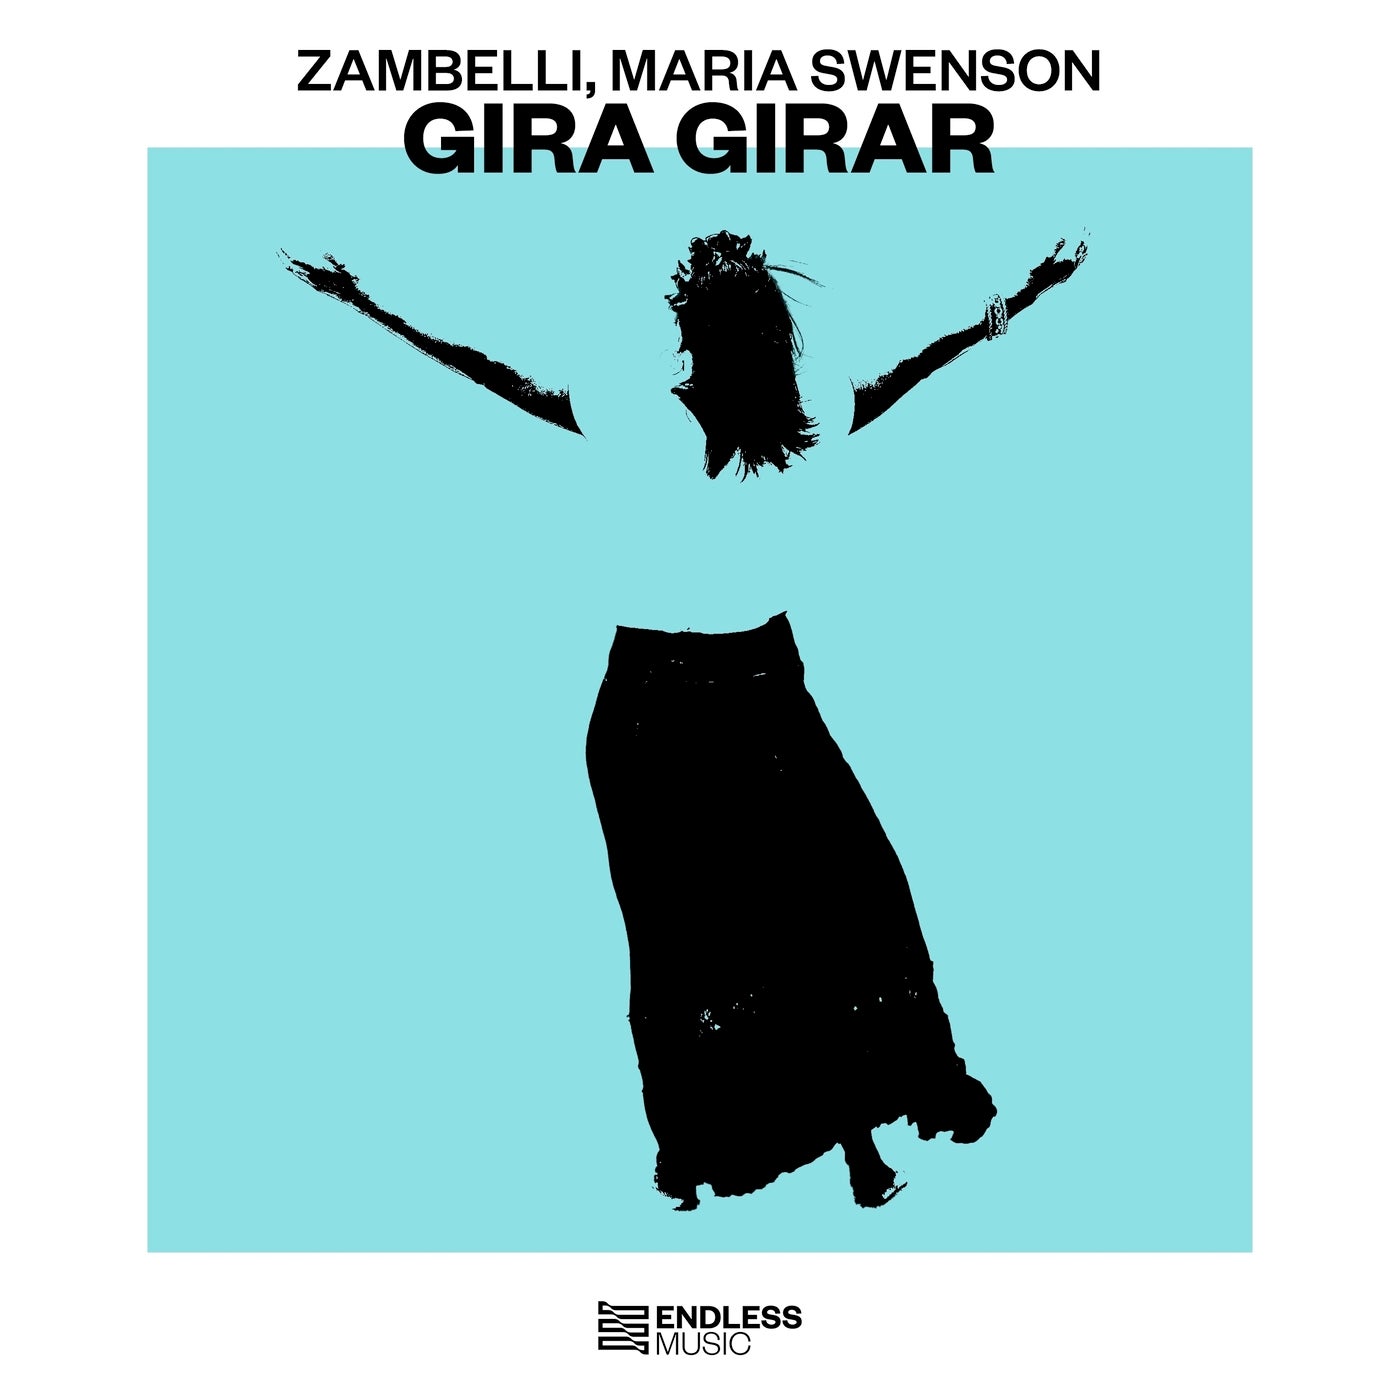 Zambelli, Maria Swenson - Gira Girar on Endless Music (BR)